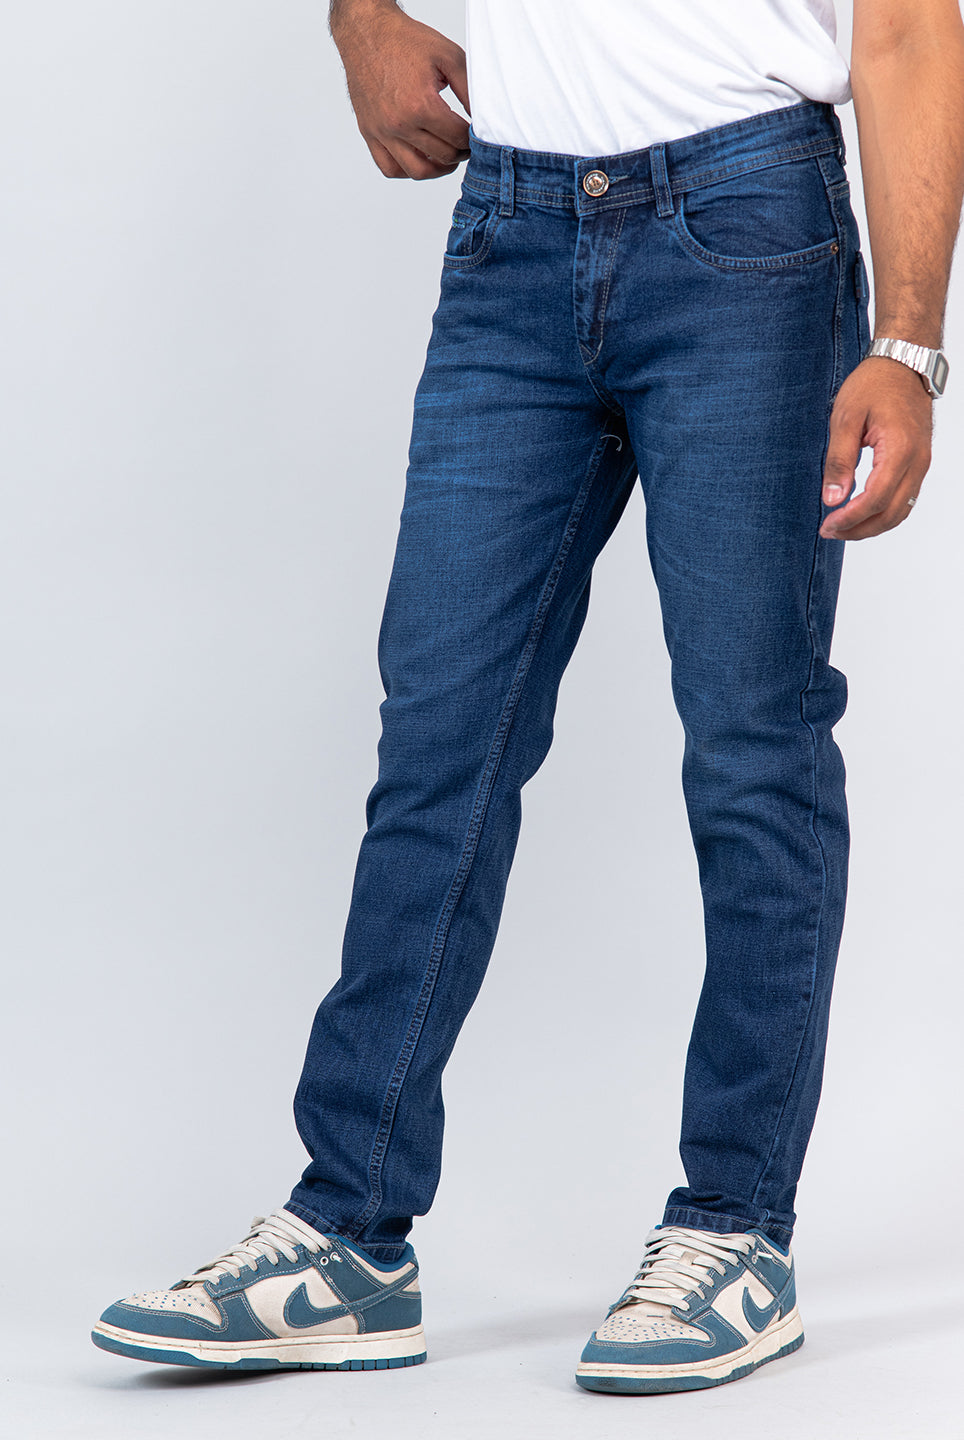 wide leg denim jeans